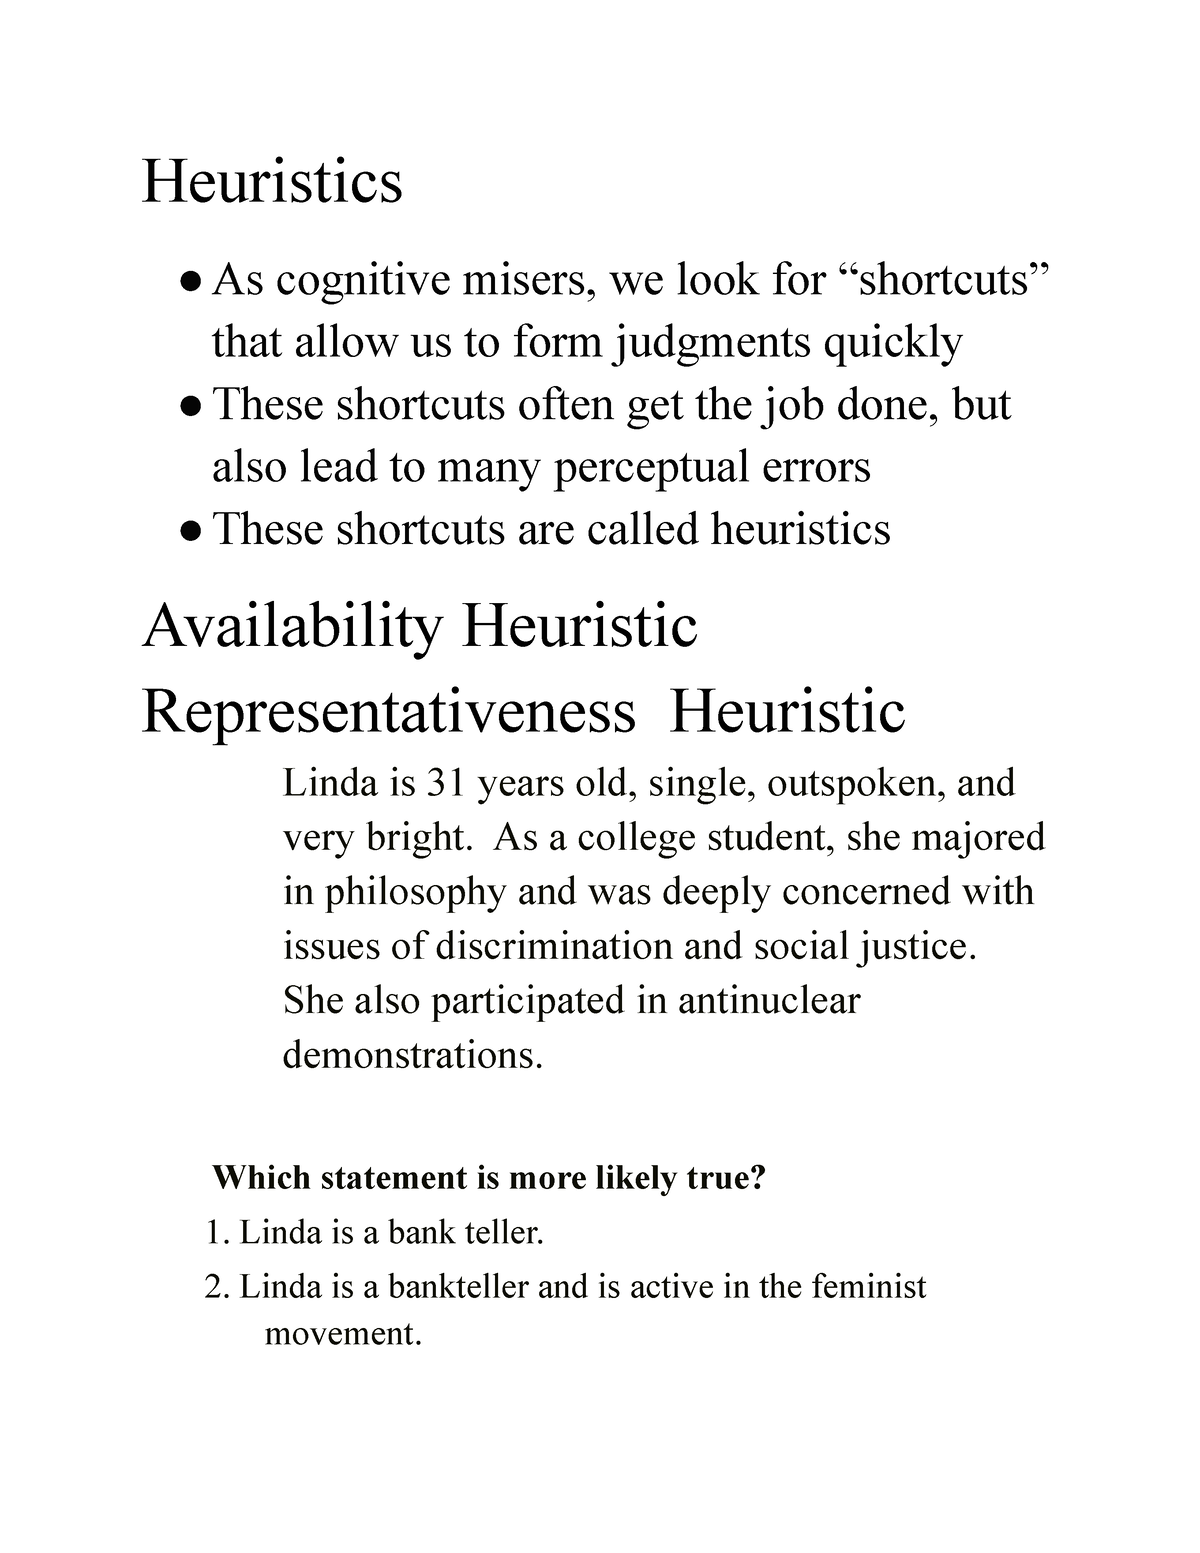 Representativeness Heuristic